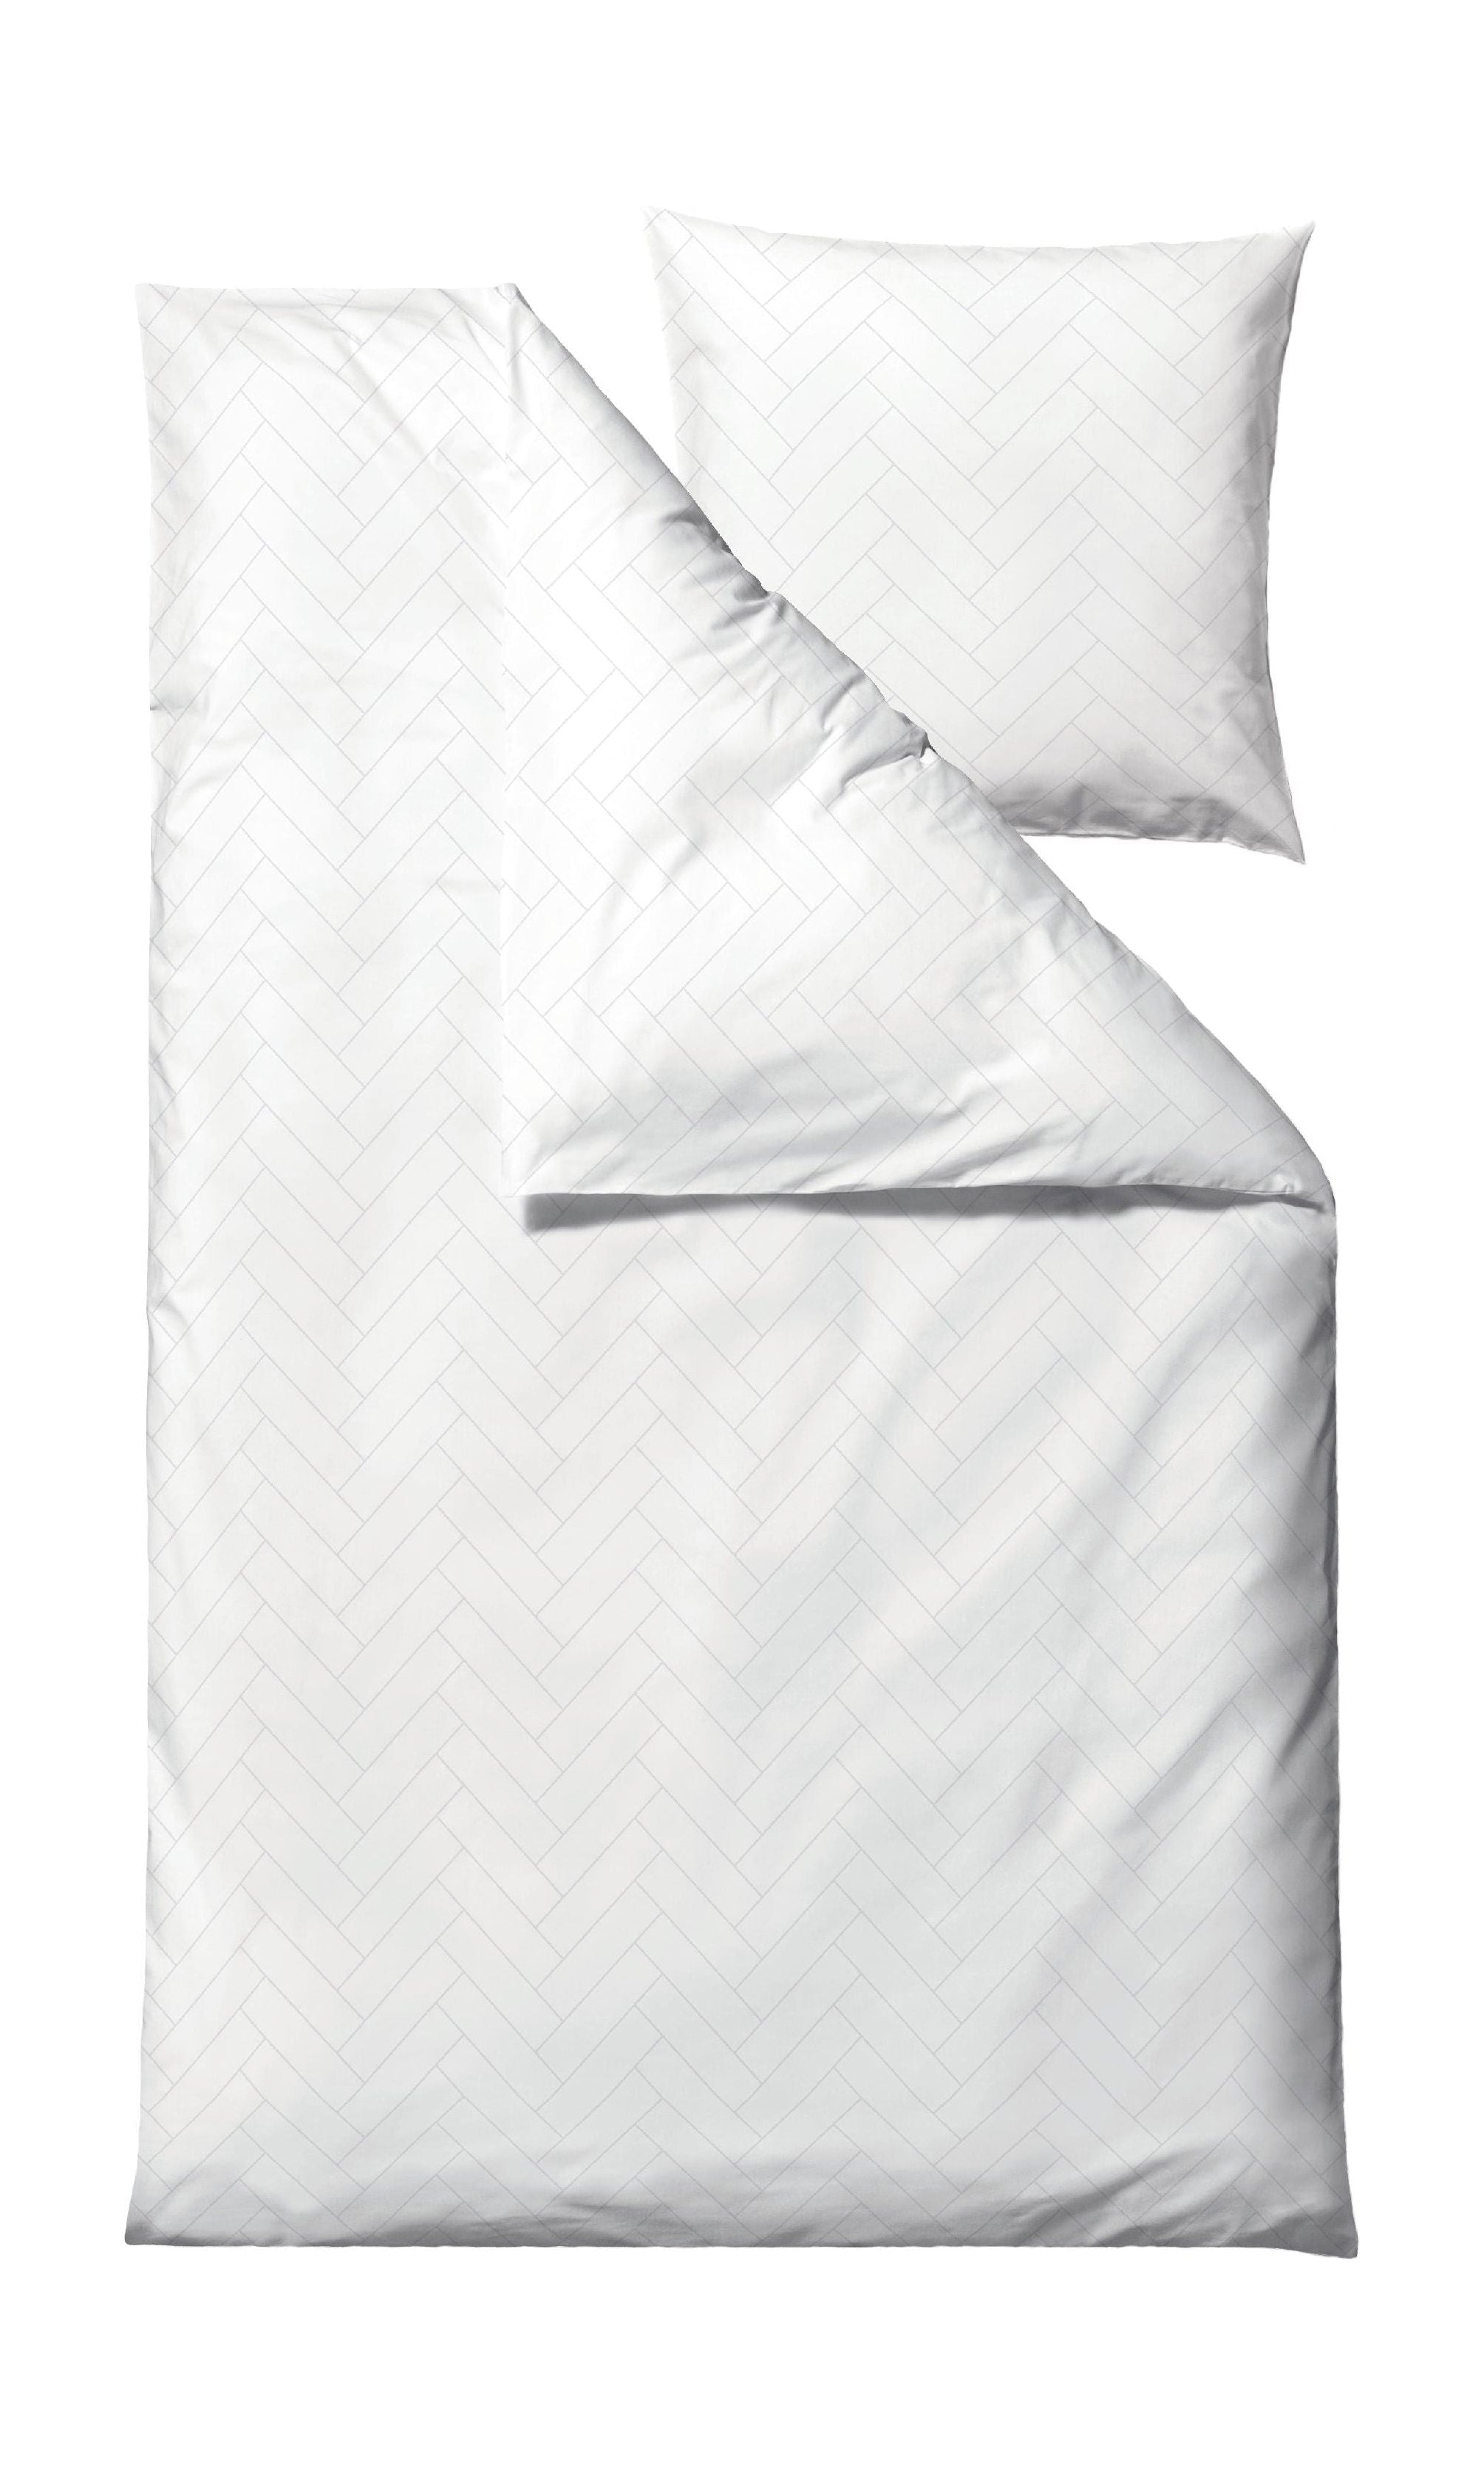 Södahl Tiles Bed Linen 140x200 cm, blanco